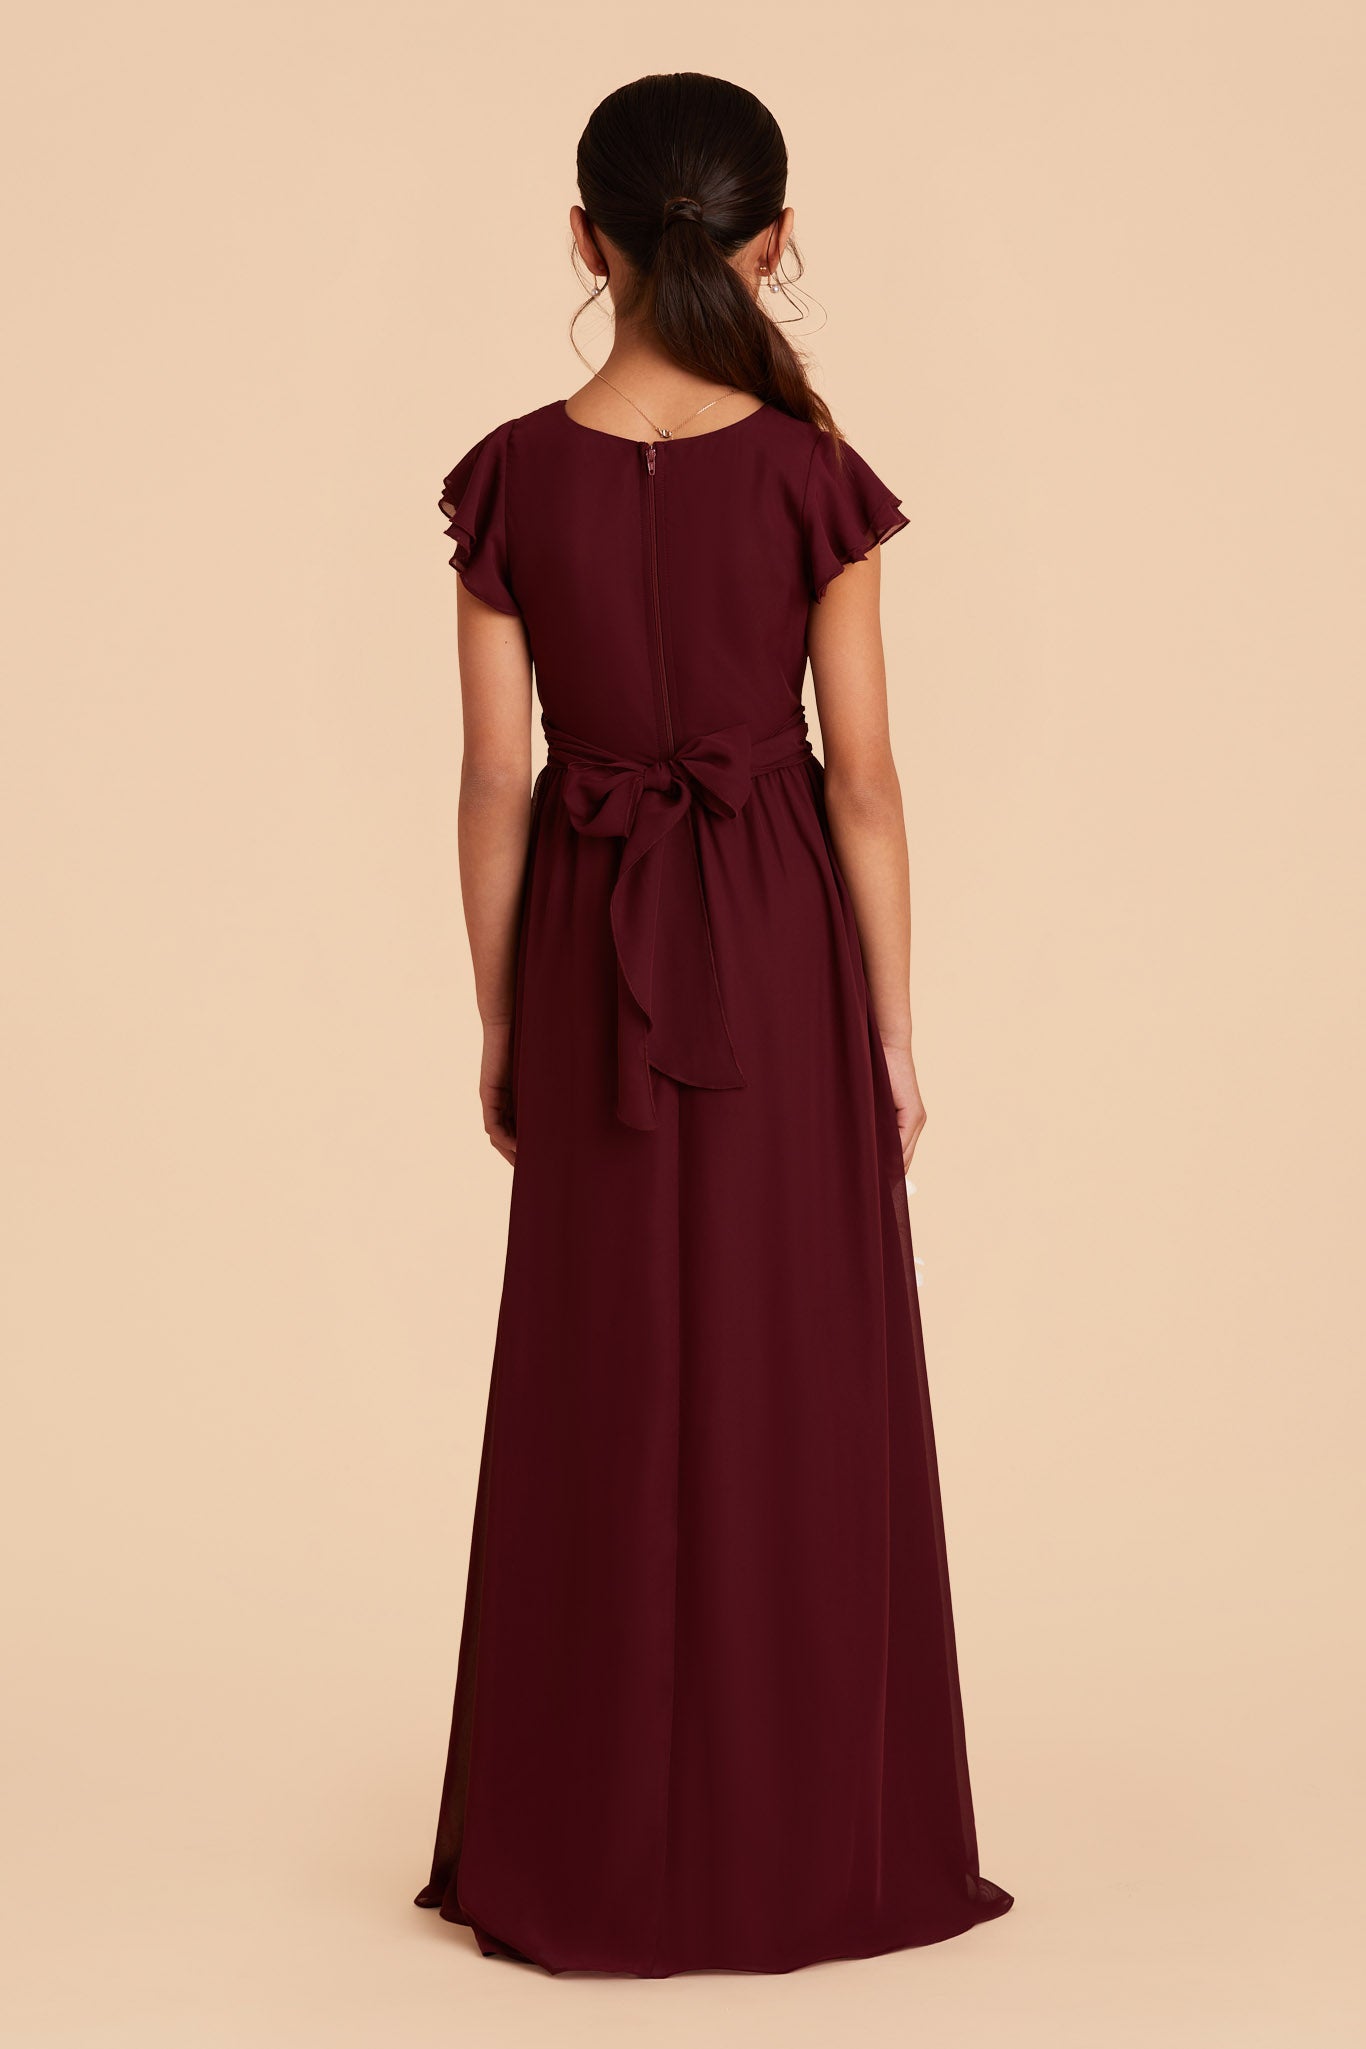 cabernet dark red frilly-sleeved floor length junior bridesmaid dress 